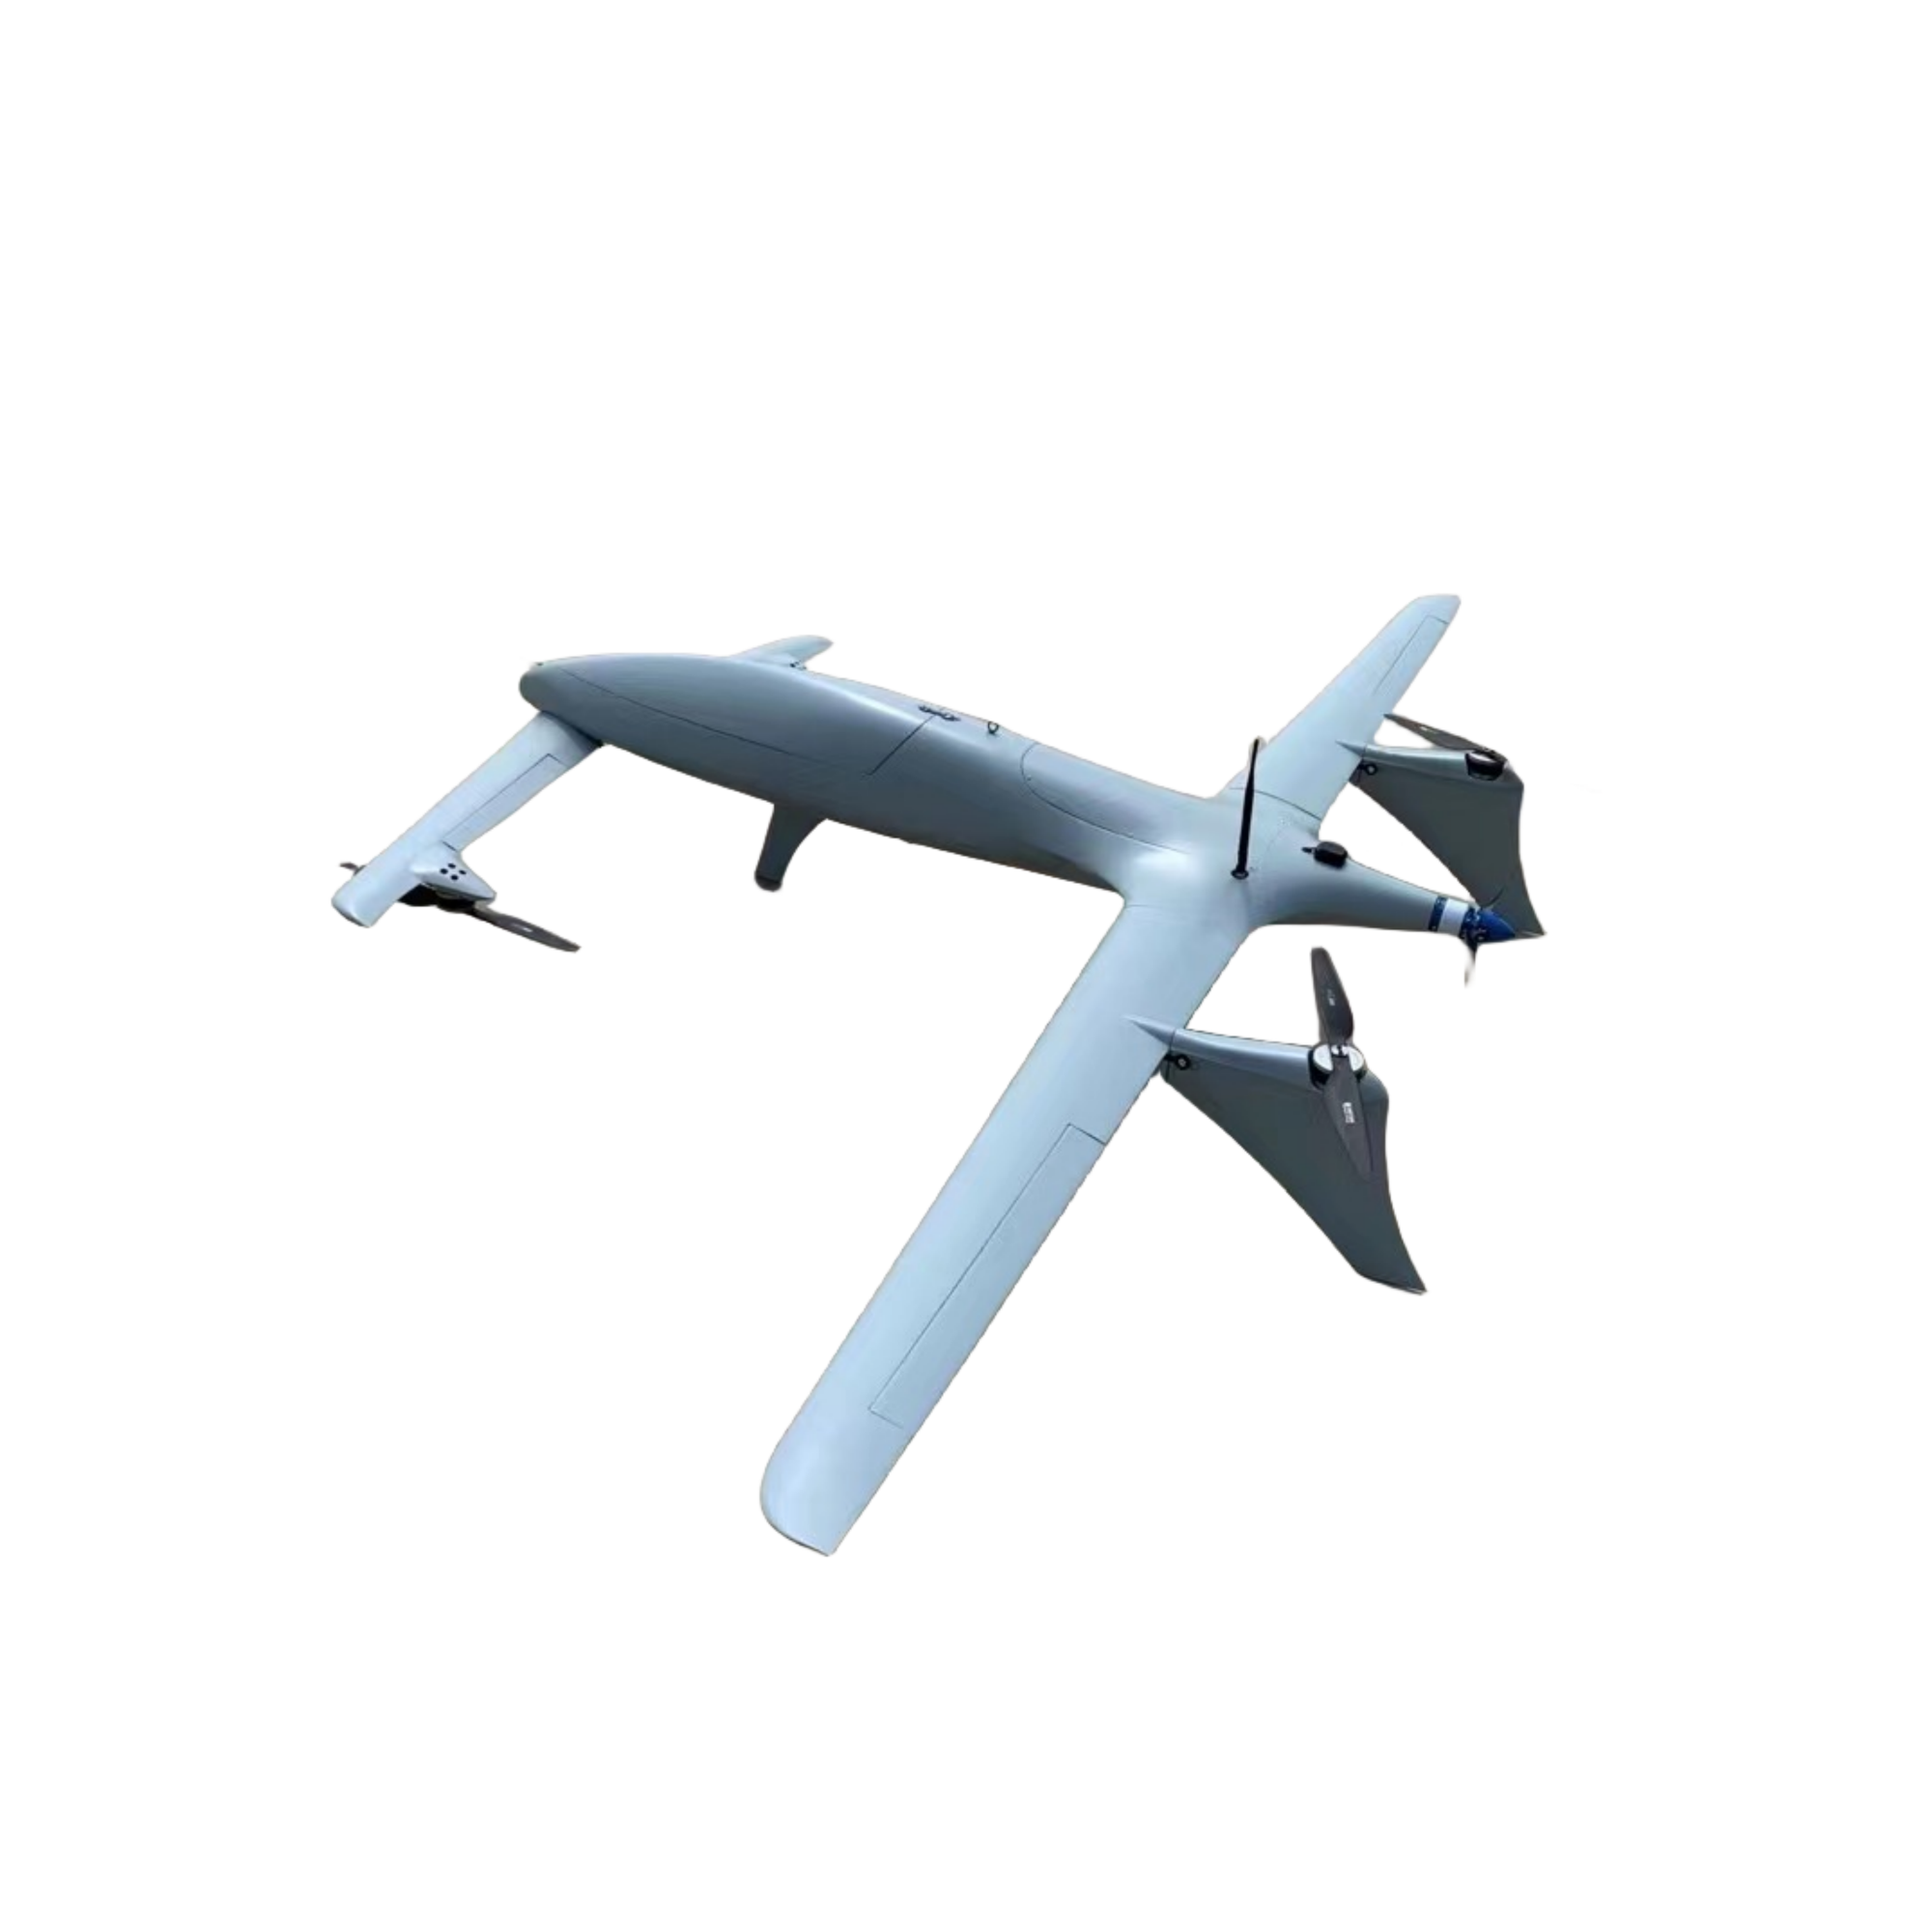 Swans VTOL UAV-Compacted for 3 Hours Endurance 2 Kg Mission Payload - Unmanned RC